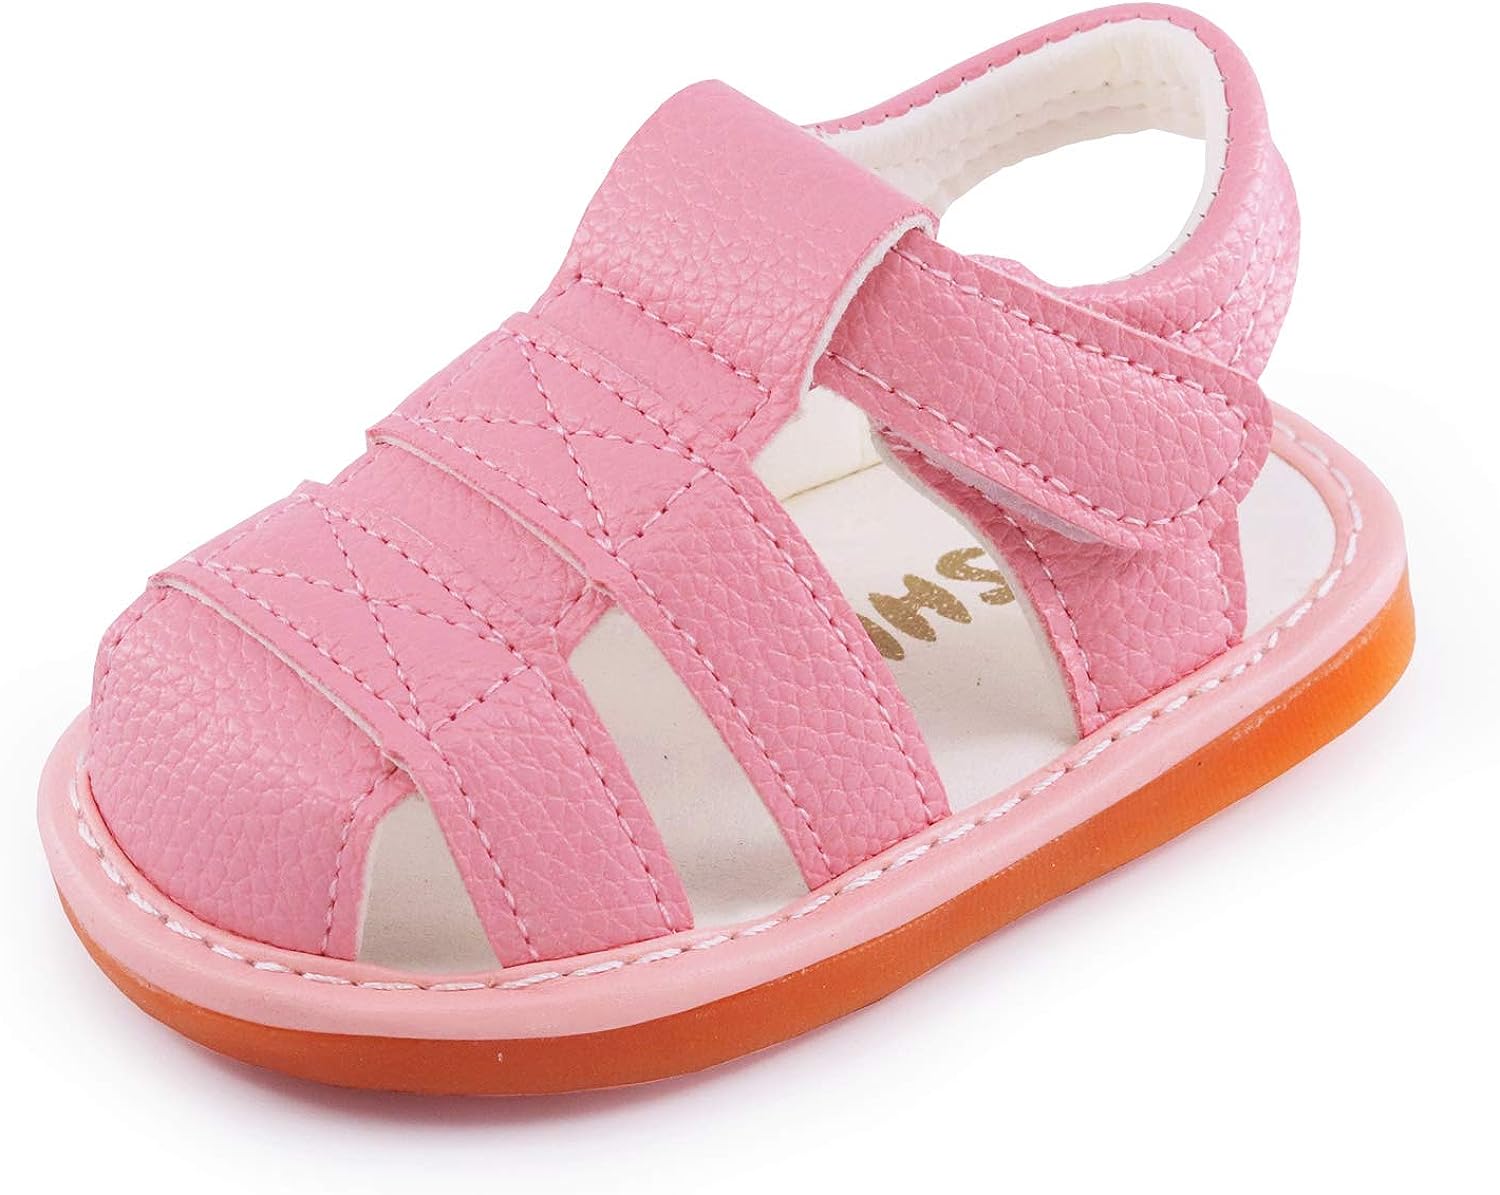 WILLFUN Baby Boy Girl Summer Infant Squeaky Sandals [...]